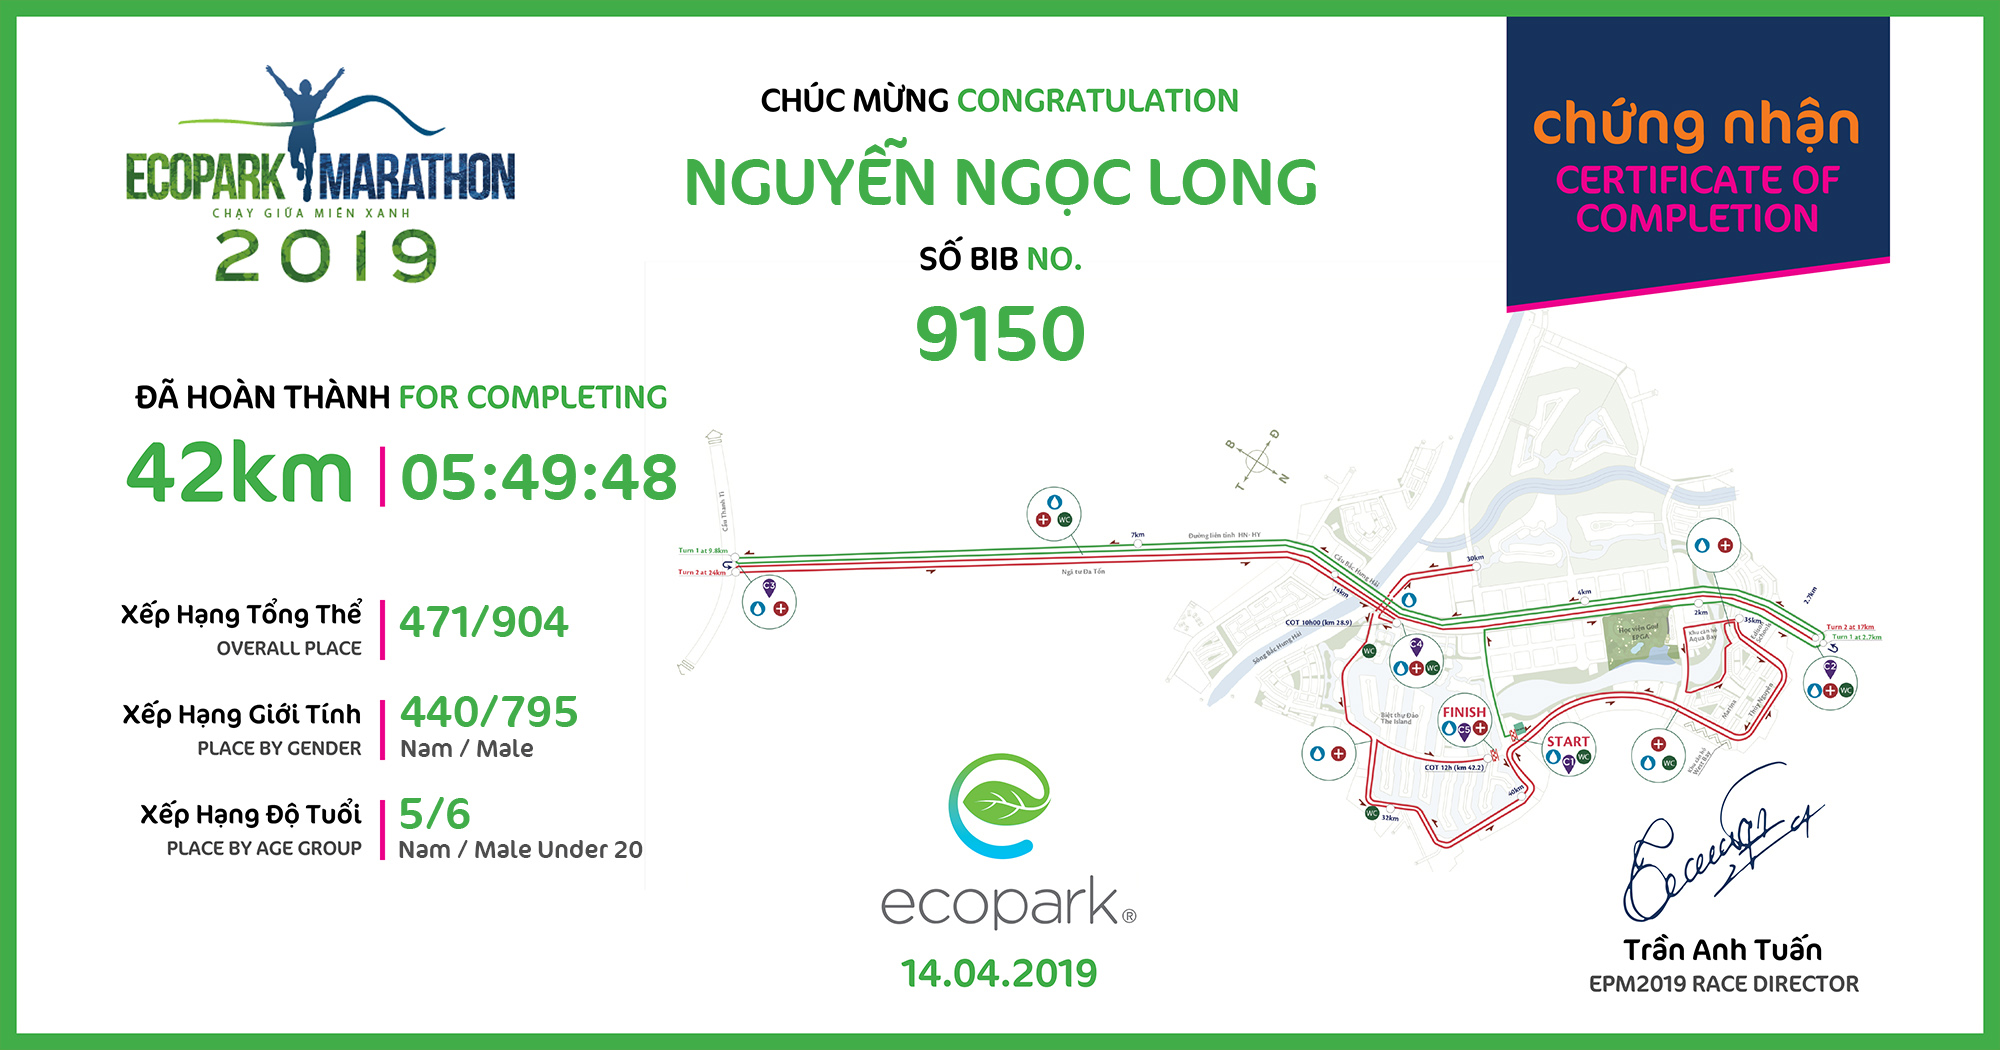 9150 - Nguyễn Ngọc Long